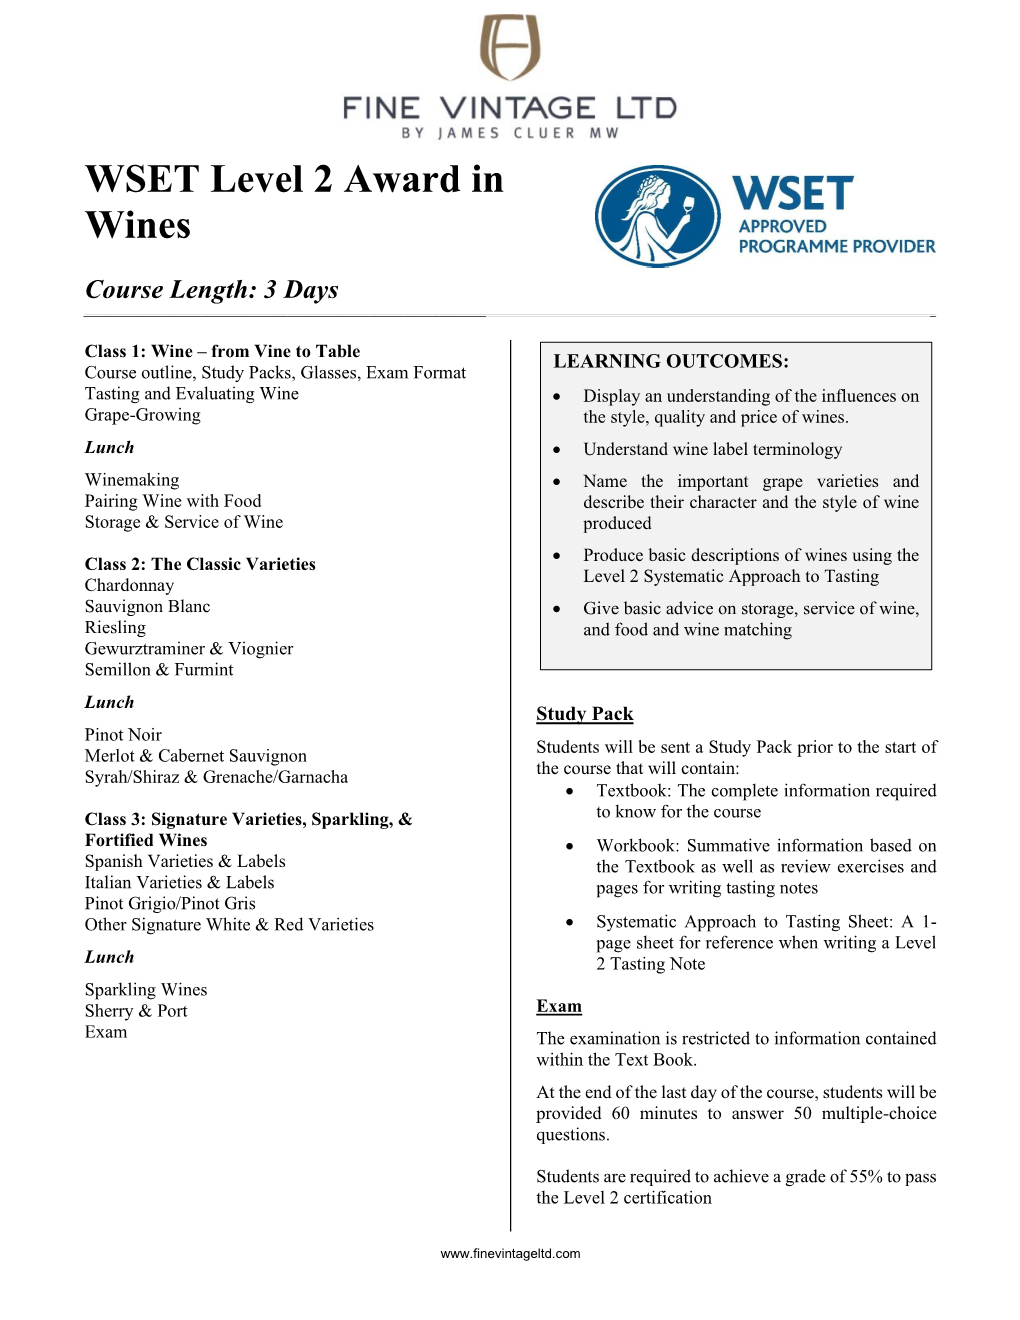 WSET Level 2 Award in Wines